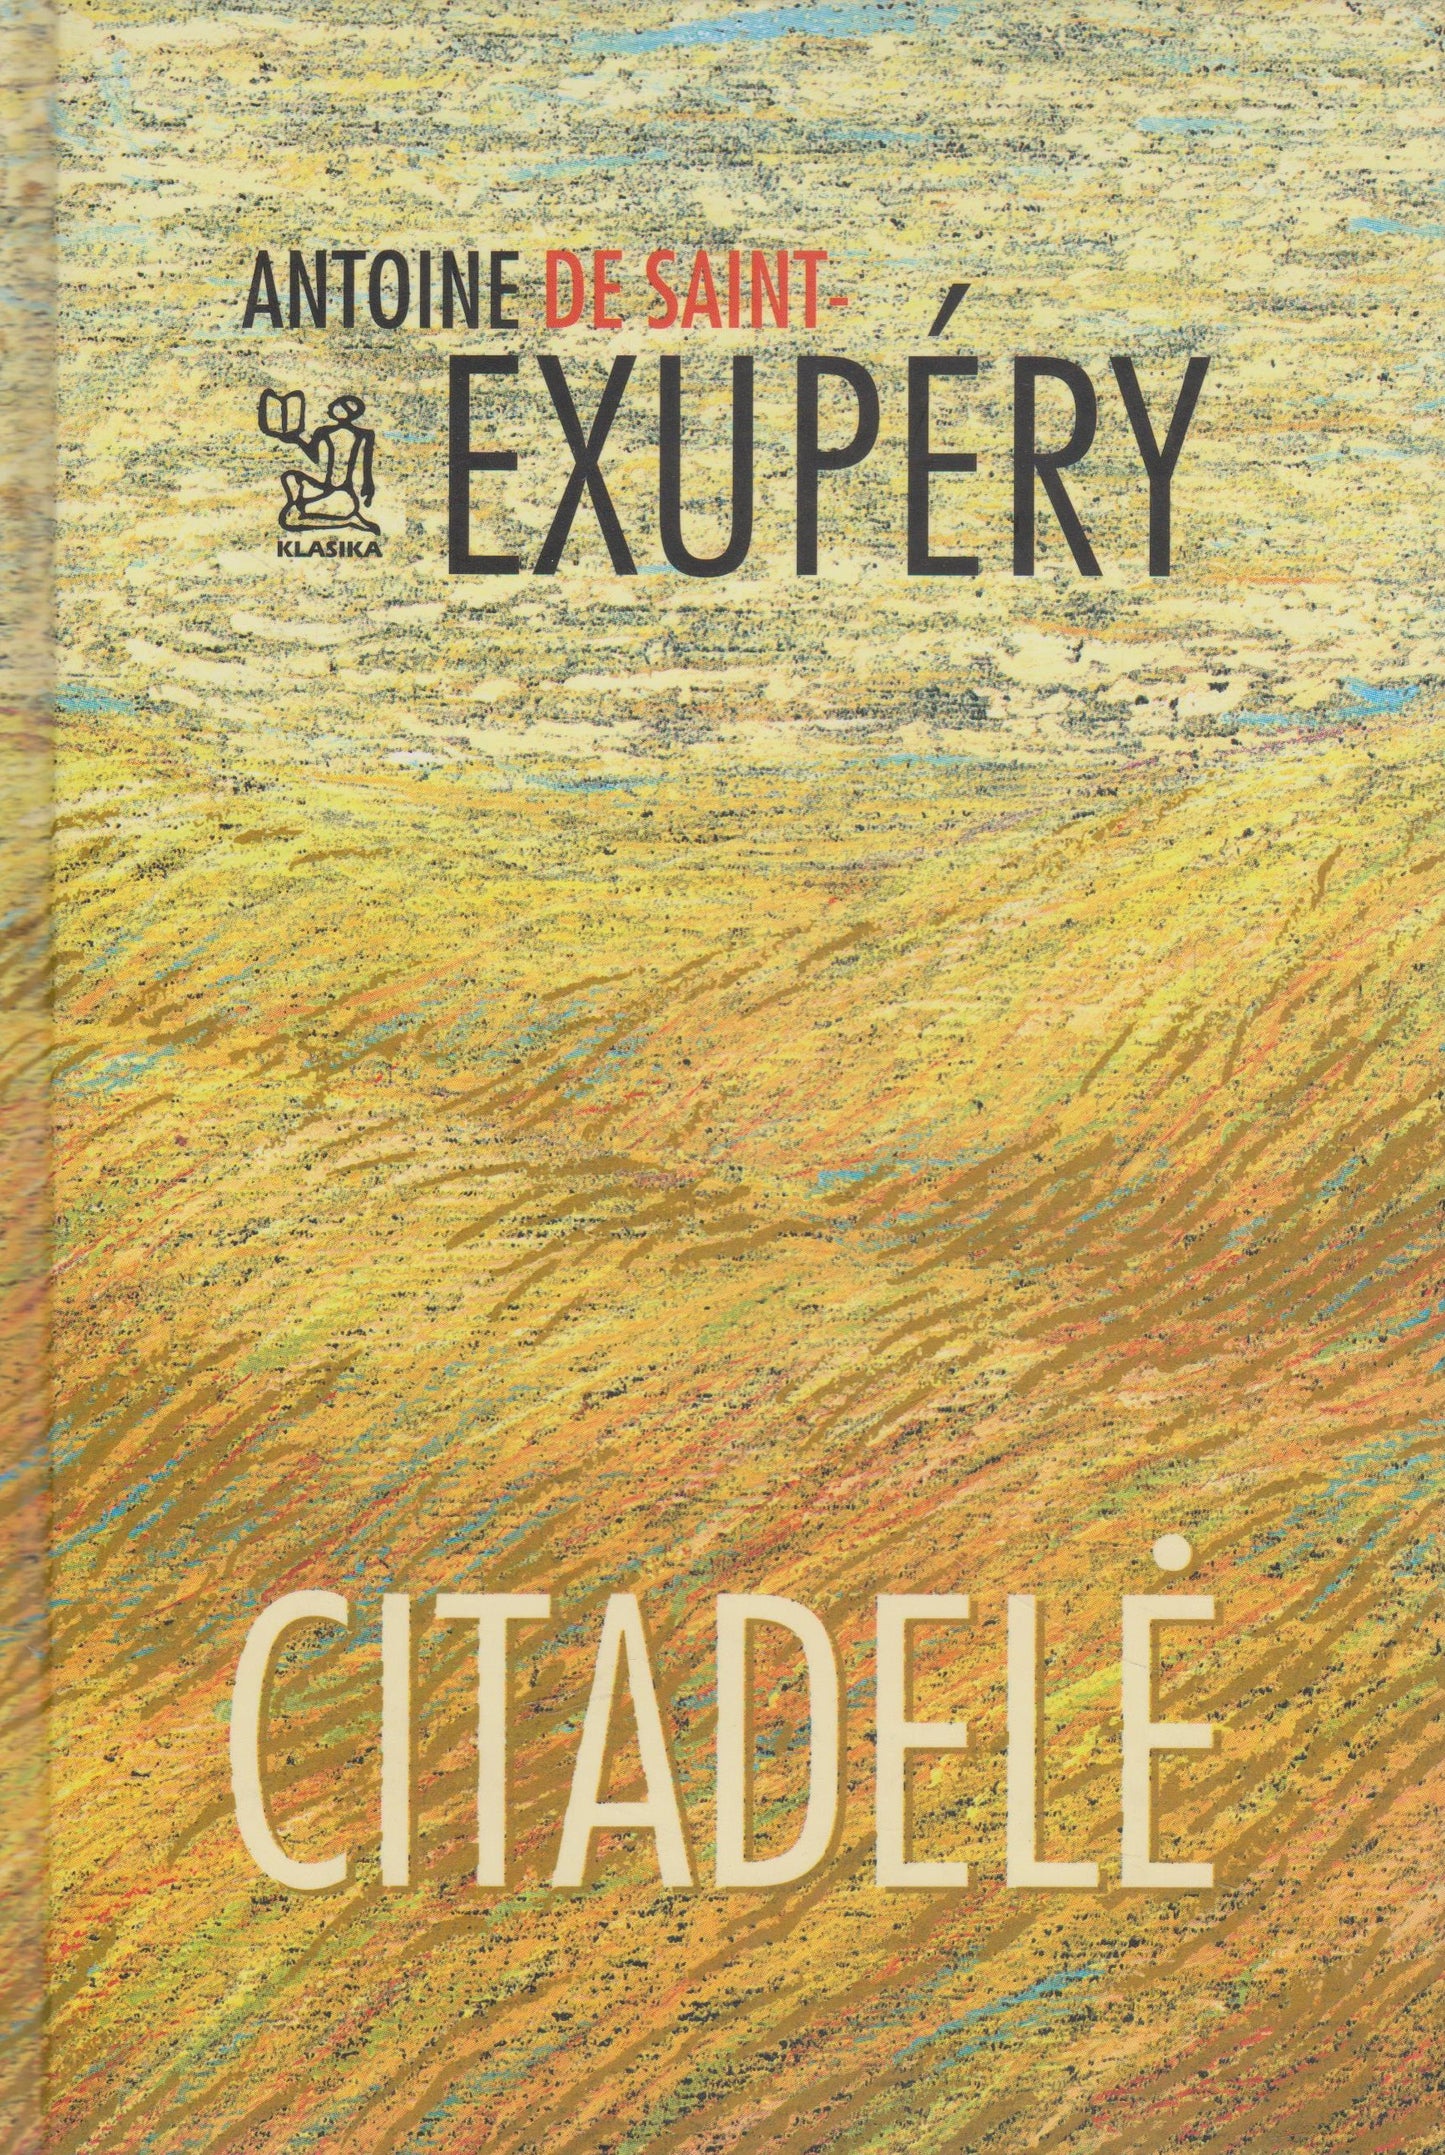 A. de Saint Exupery - Citadelė